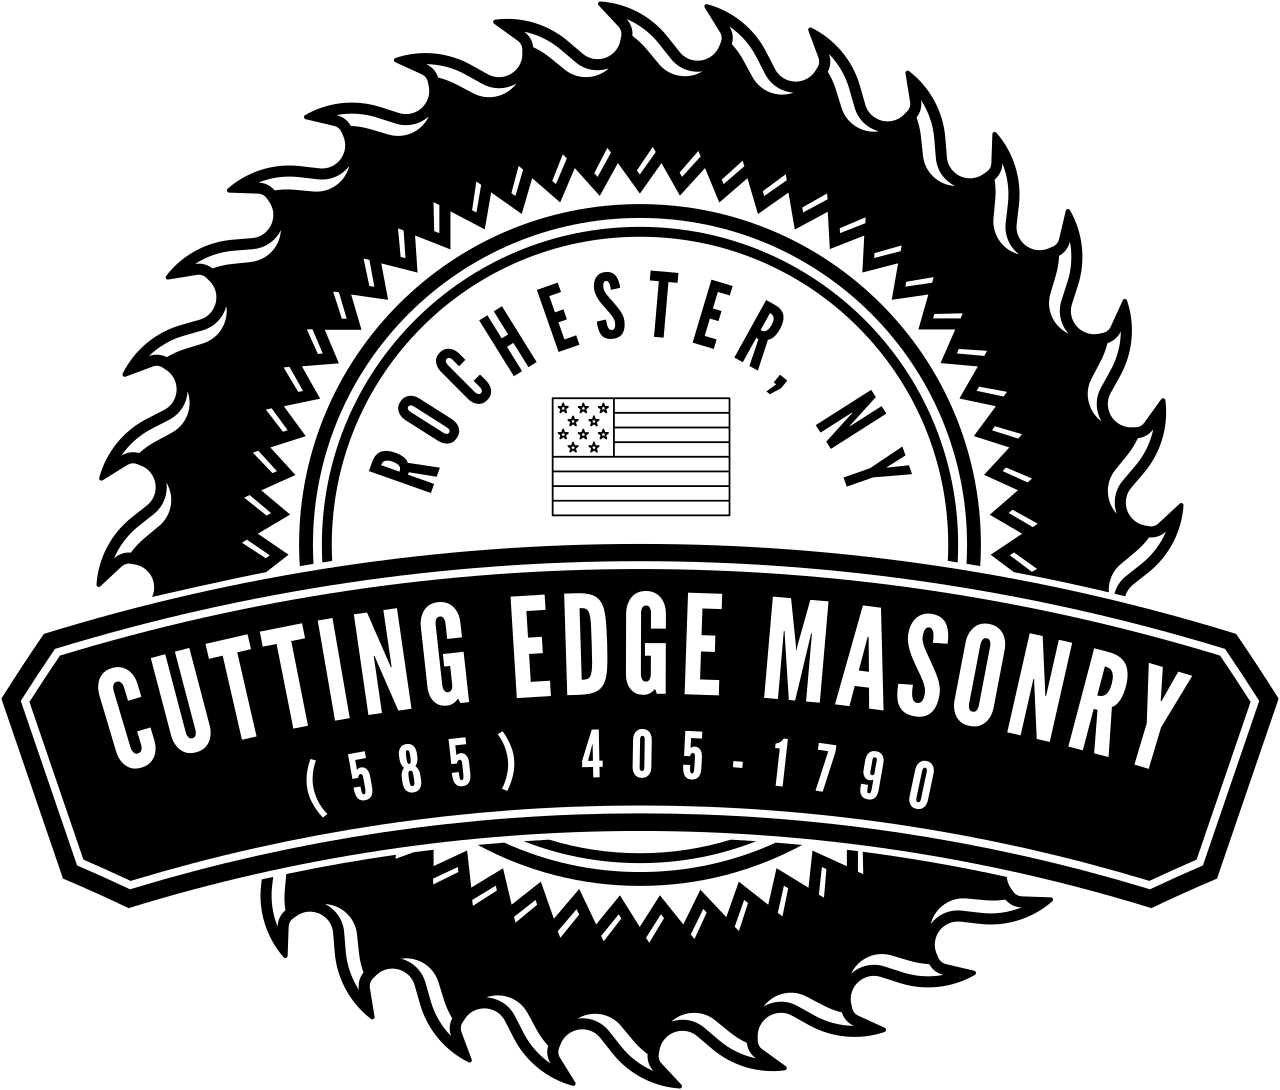 CUTTING EDGE MASONRY's logo